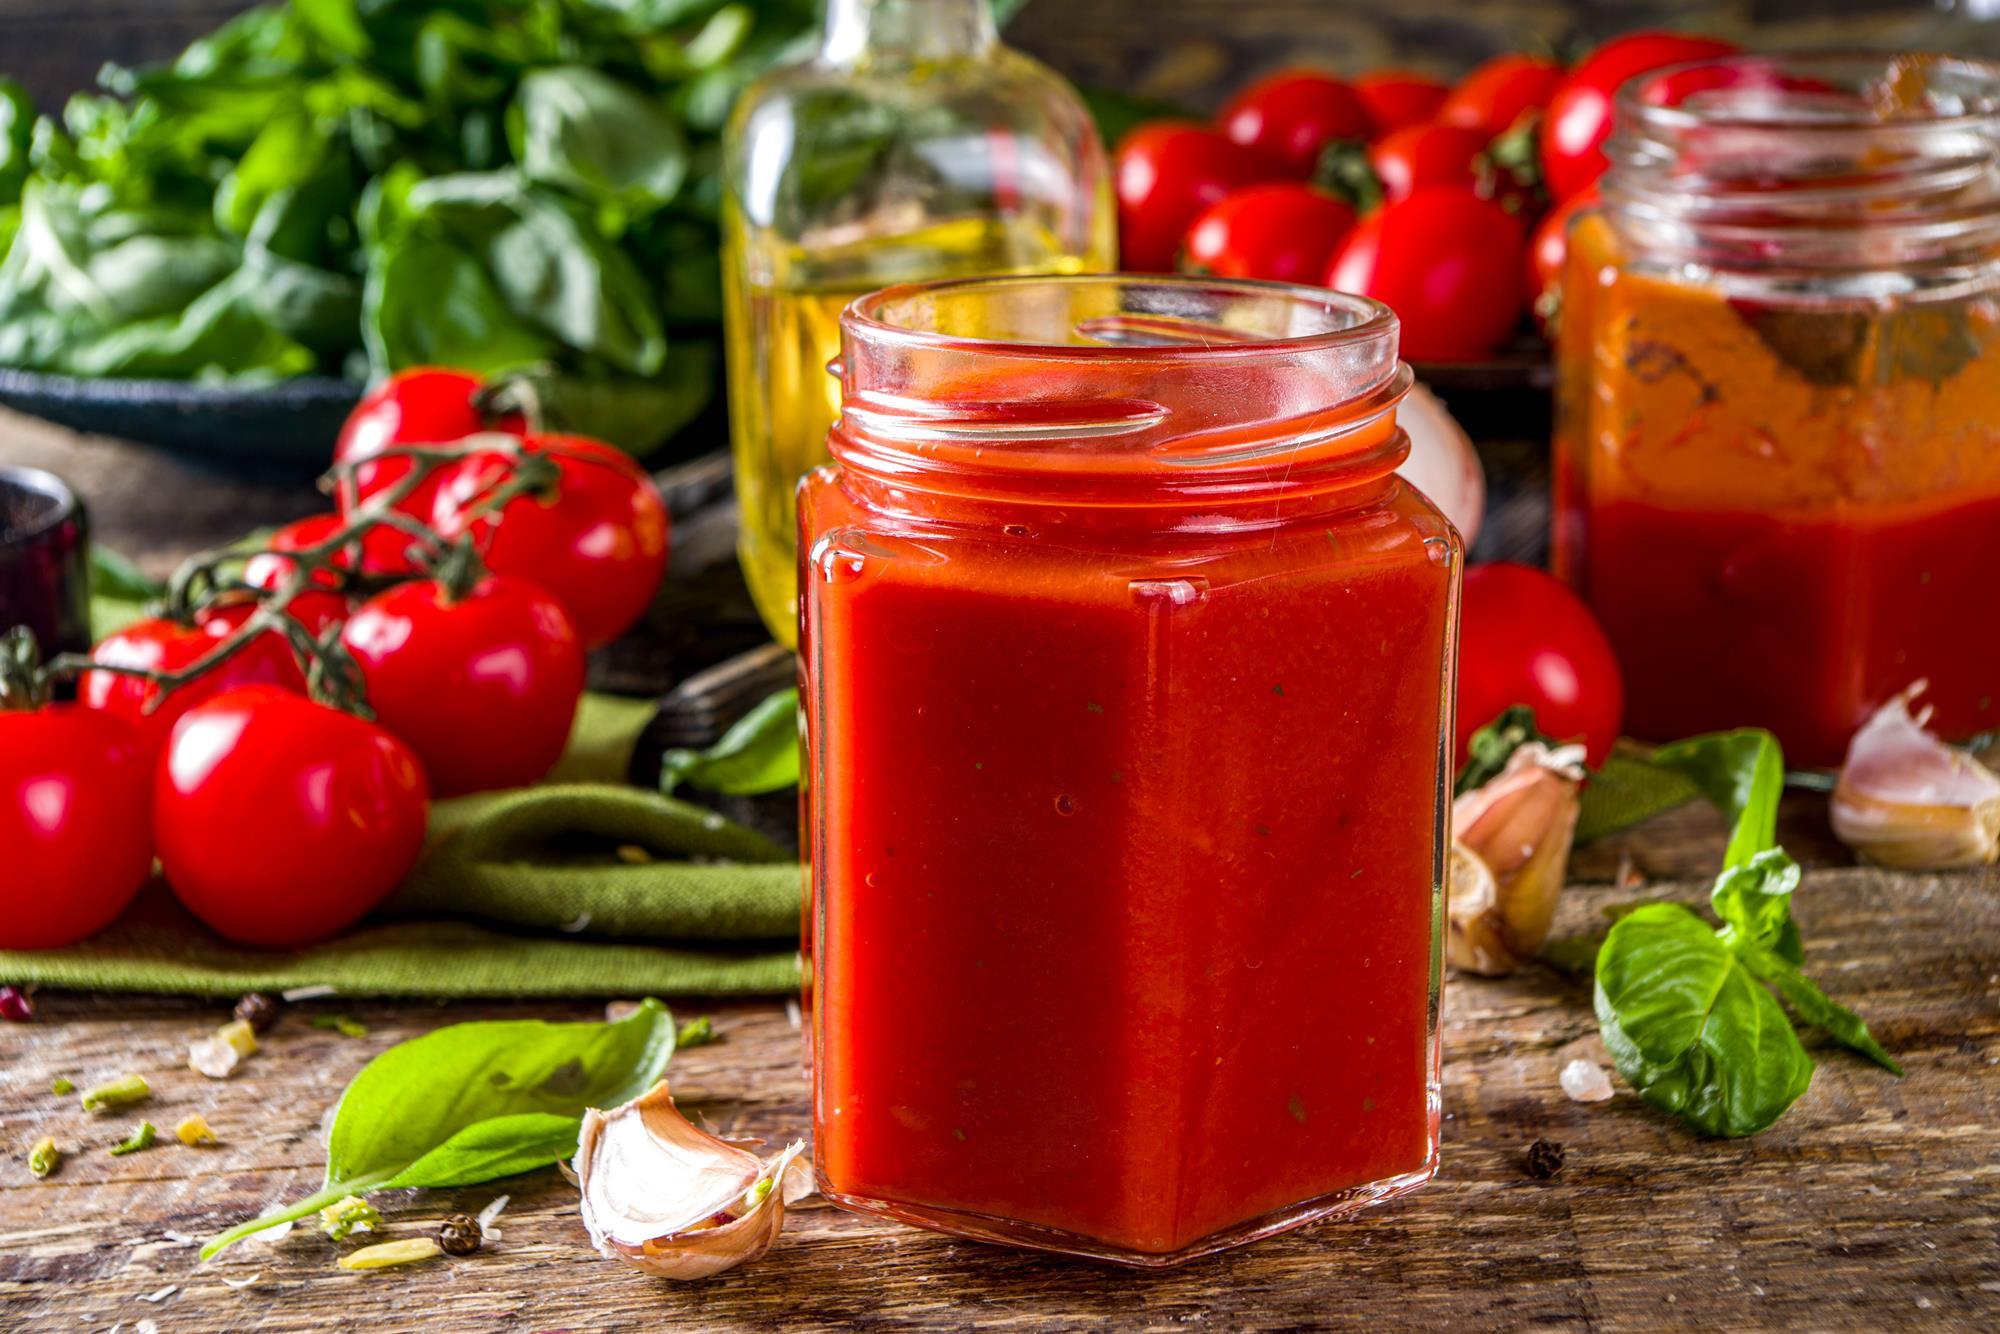 26 Ways to Reuse Glass Pasta Sauce Jars From Aldi